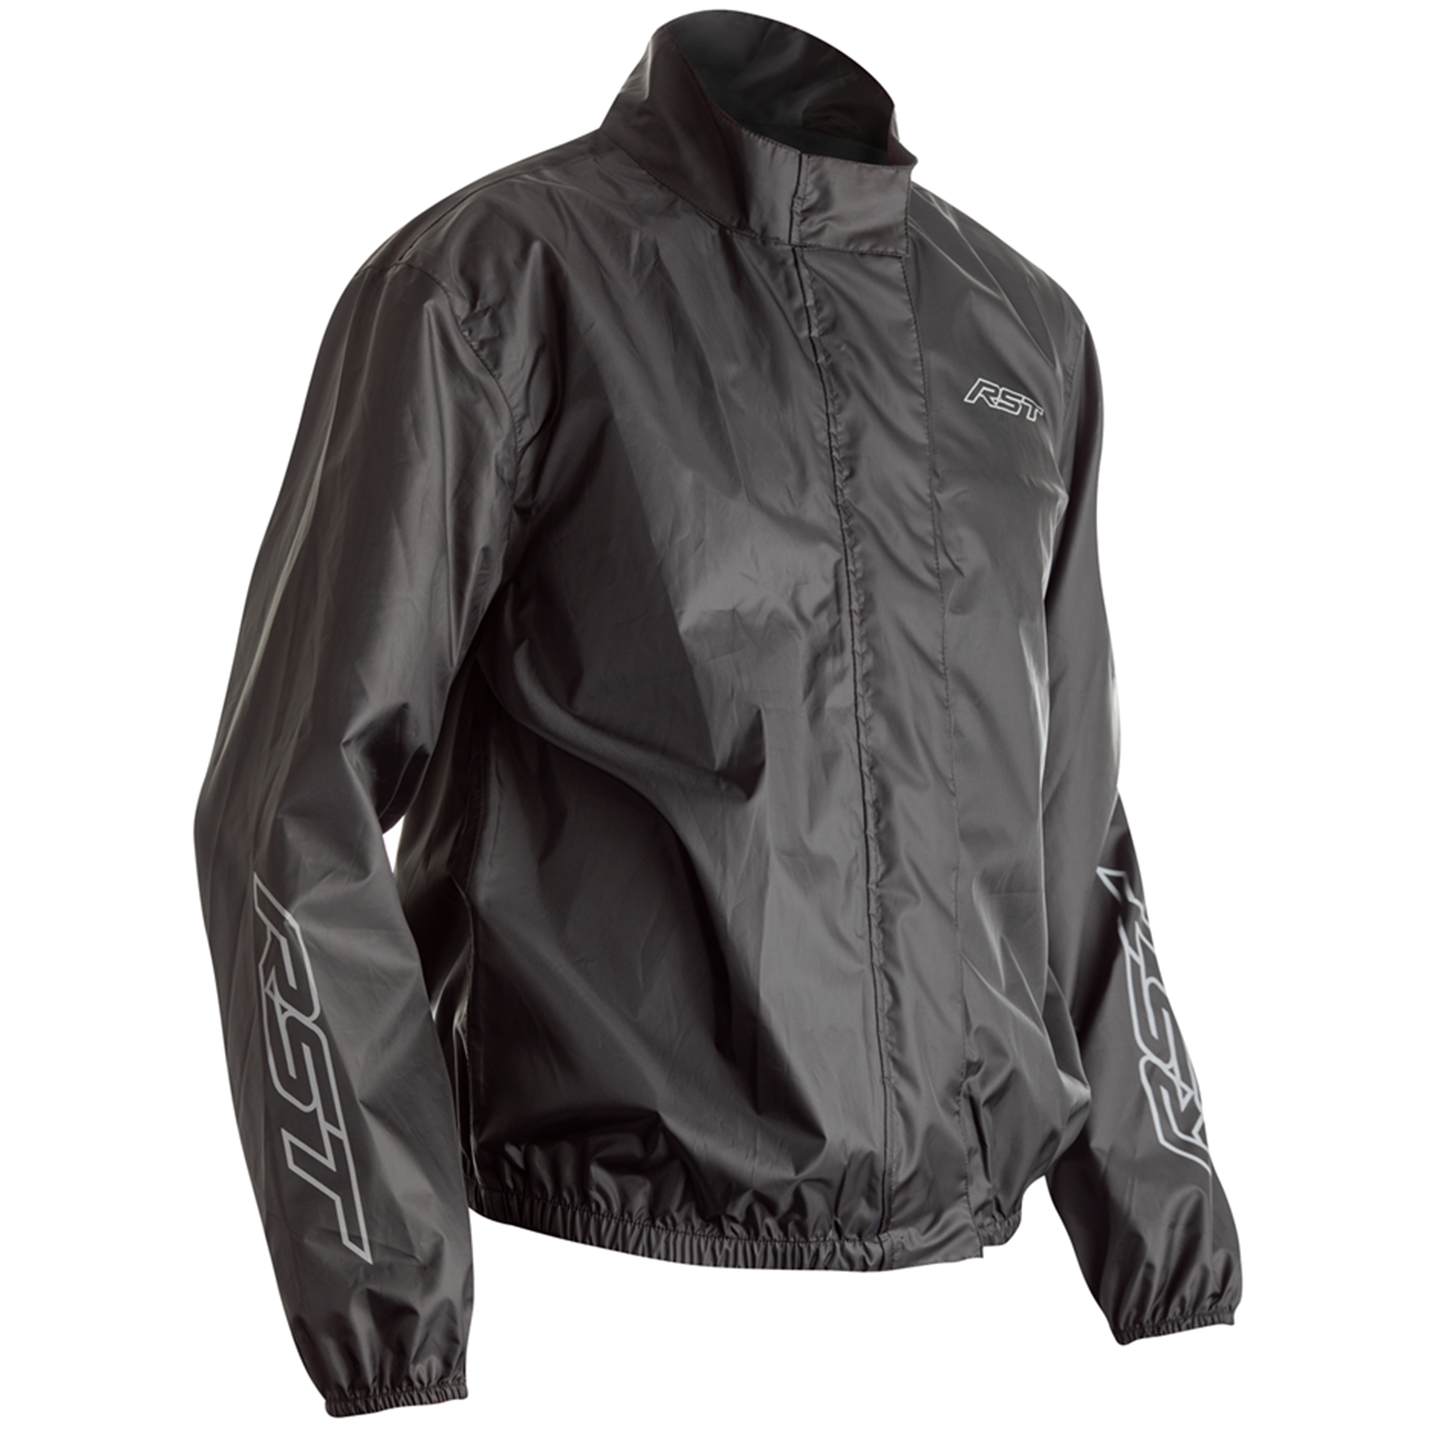 RST Lightweight Waterproof Jacket